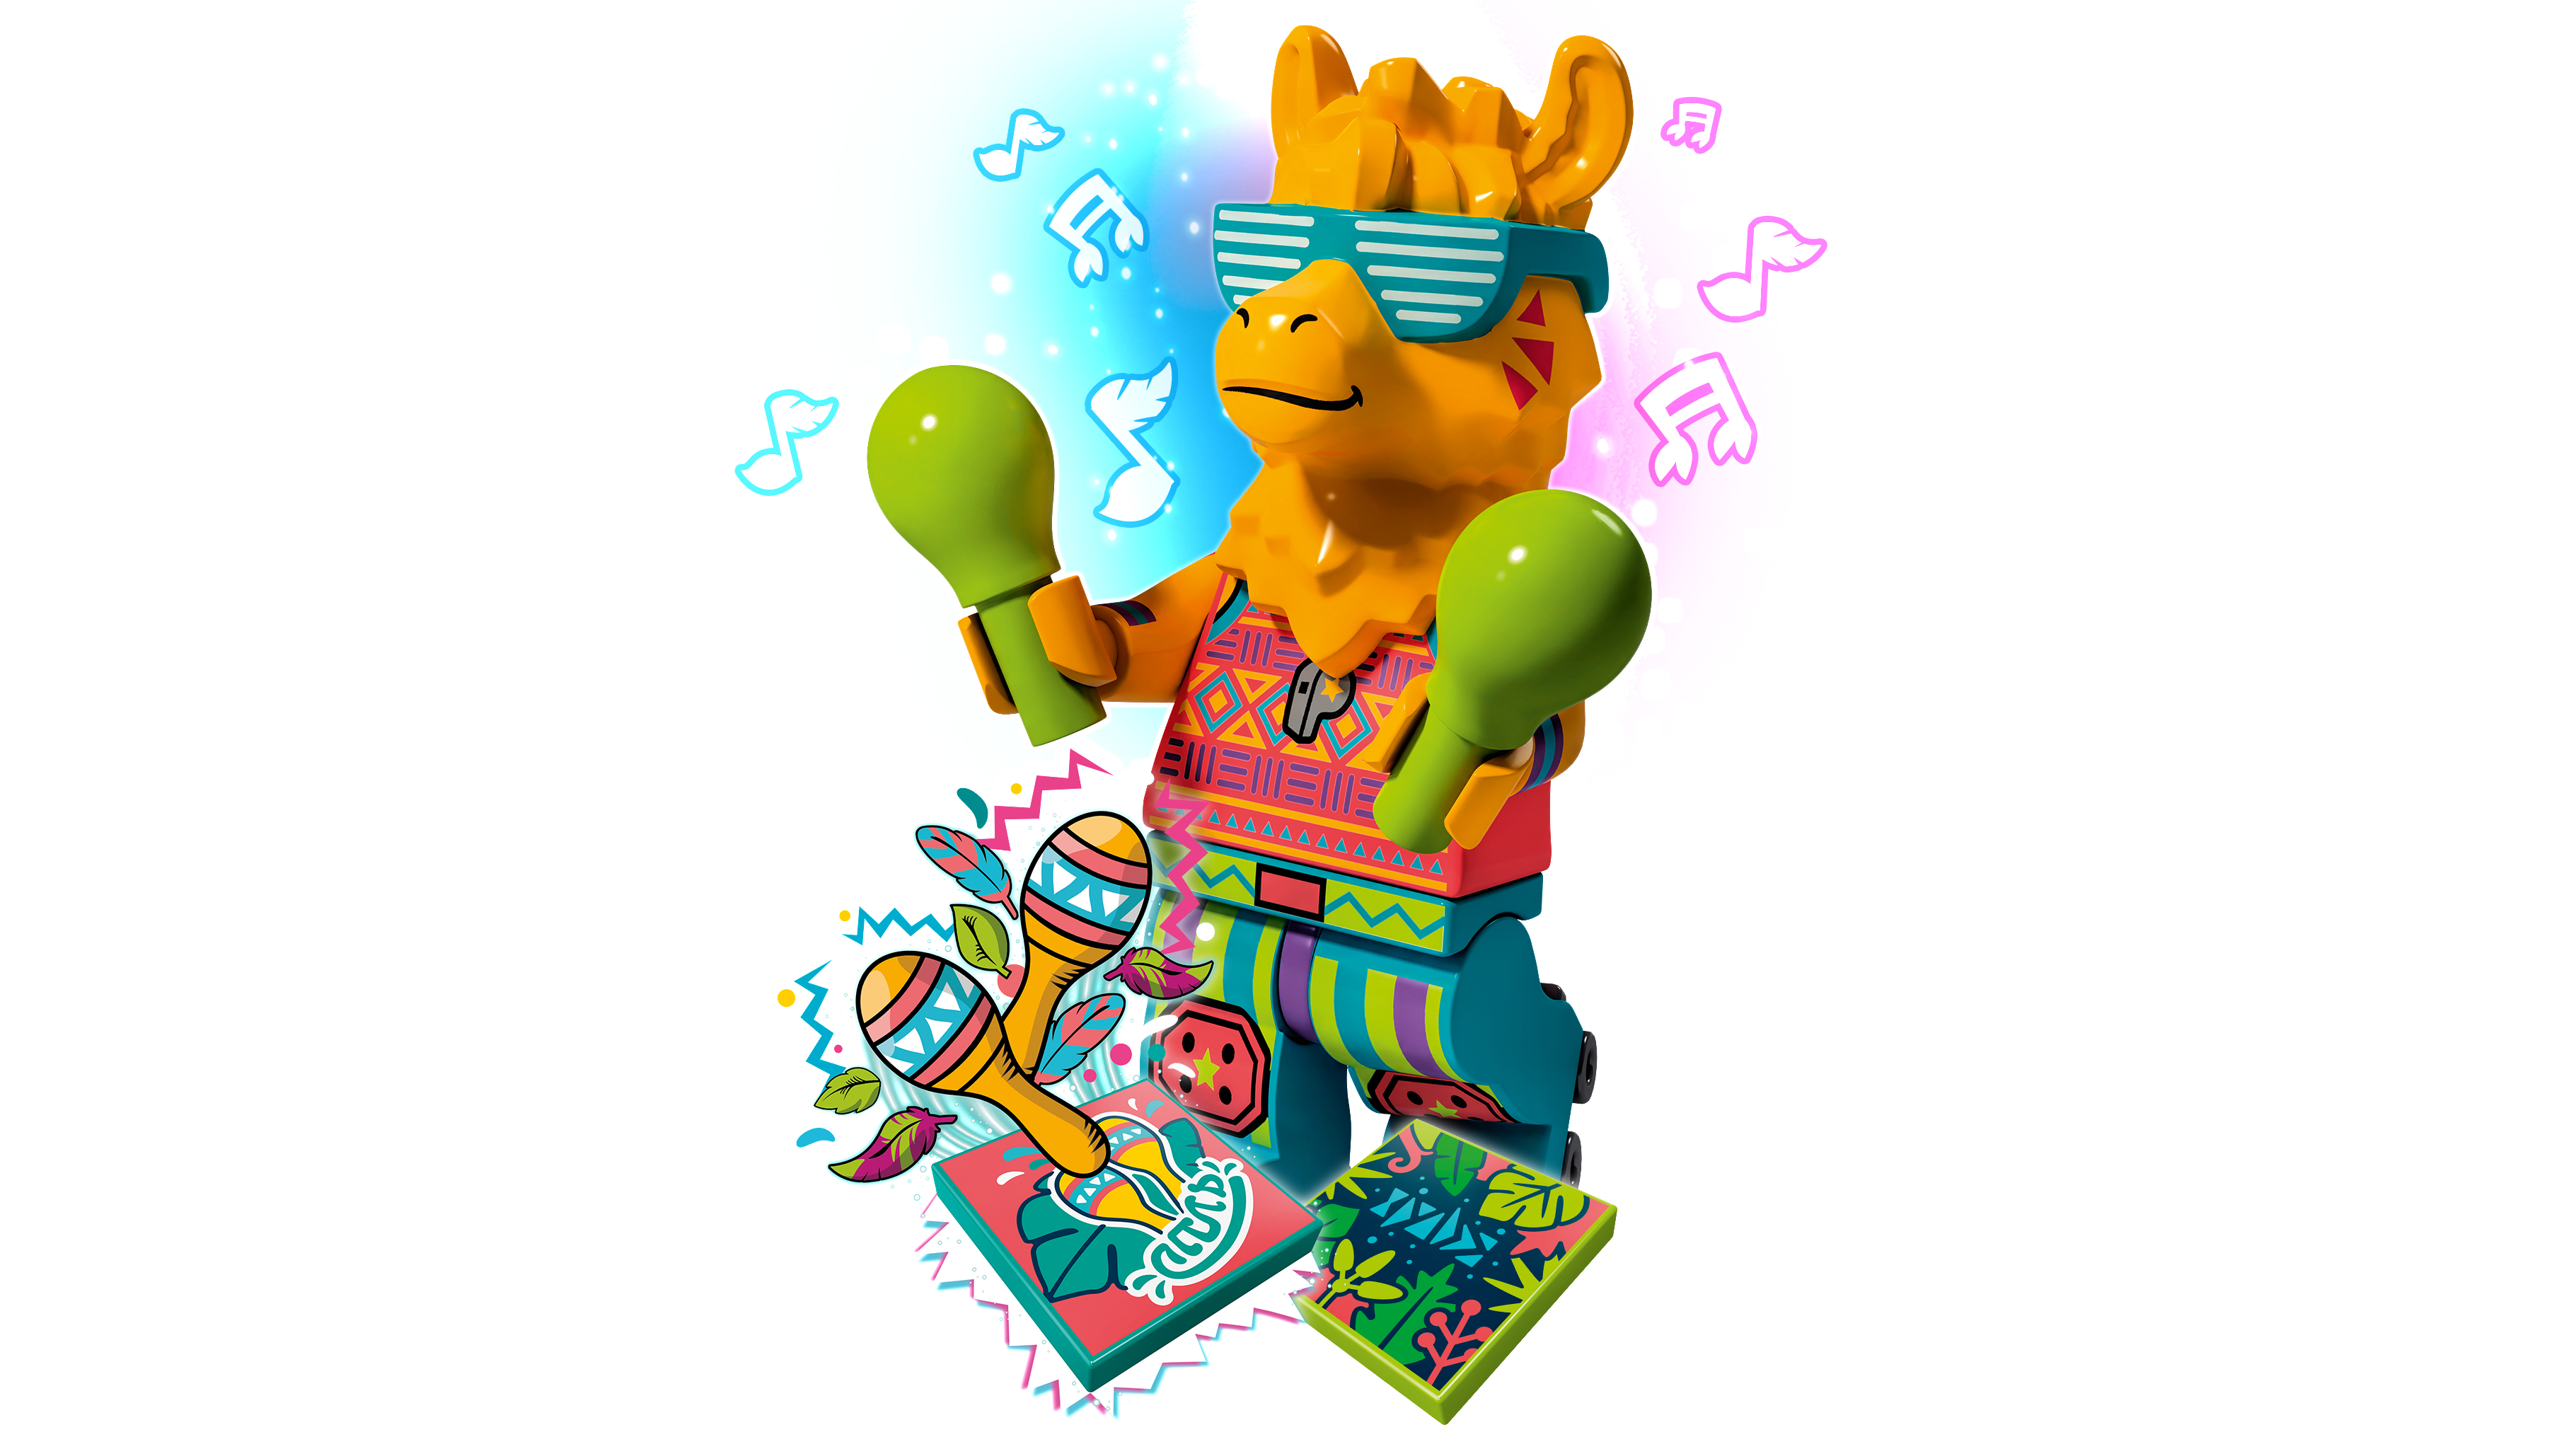 LEGO 43105 Party Llama BeatBox Mehrfarbig Bausatz